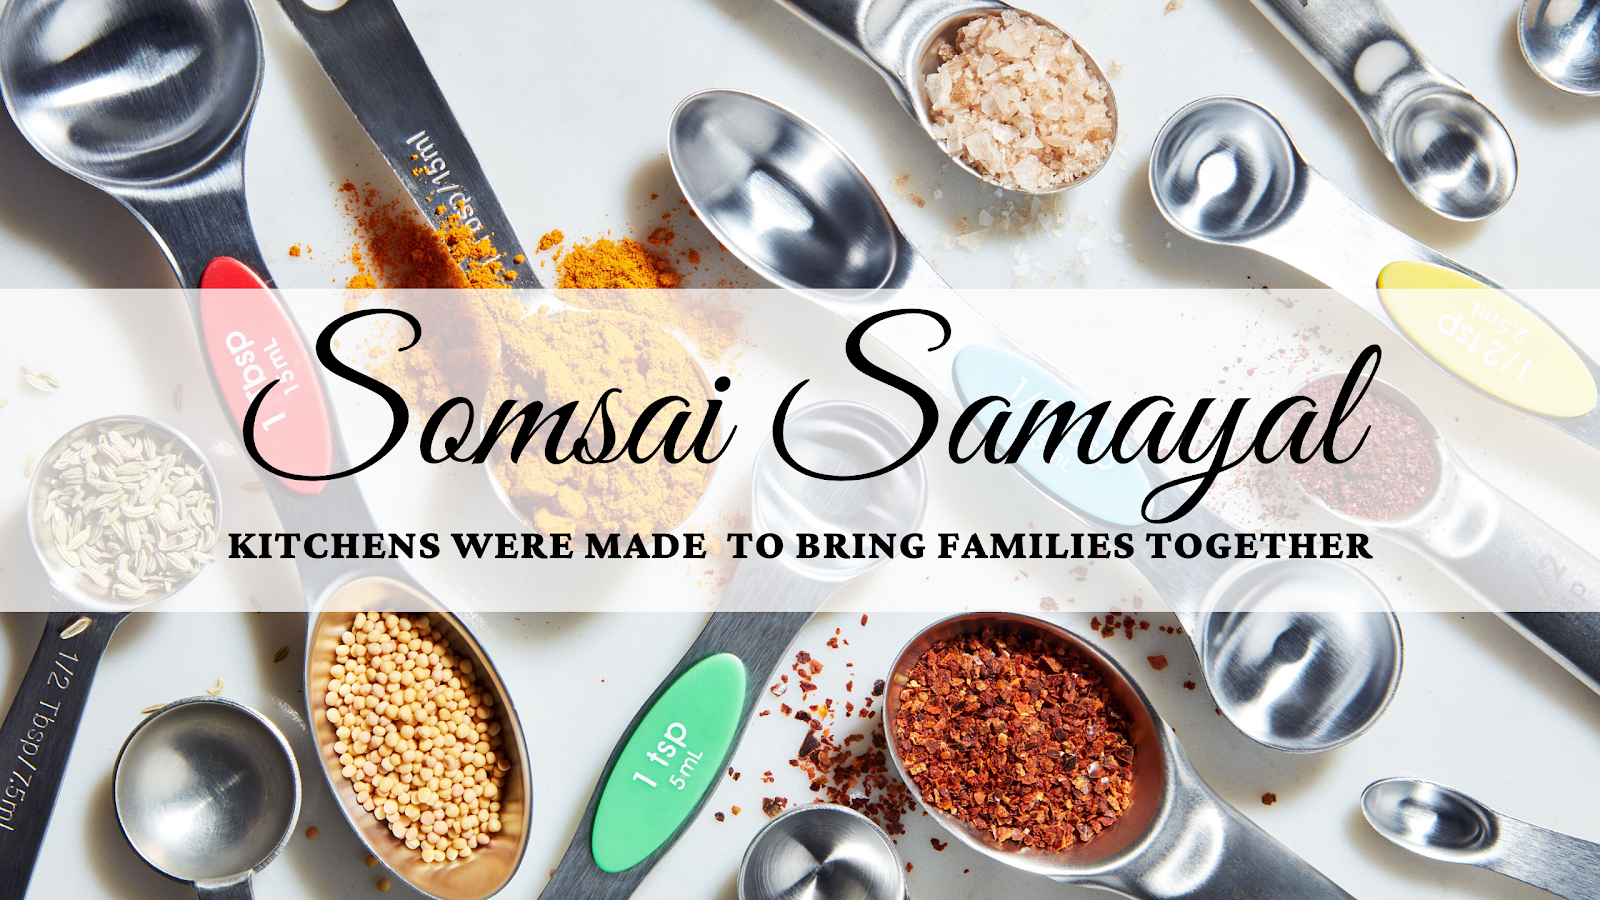 Somsai Samayal 